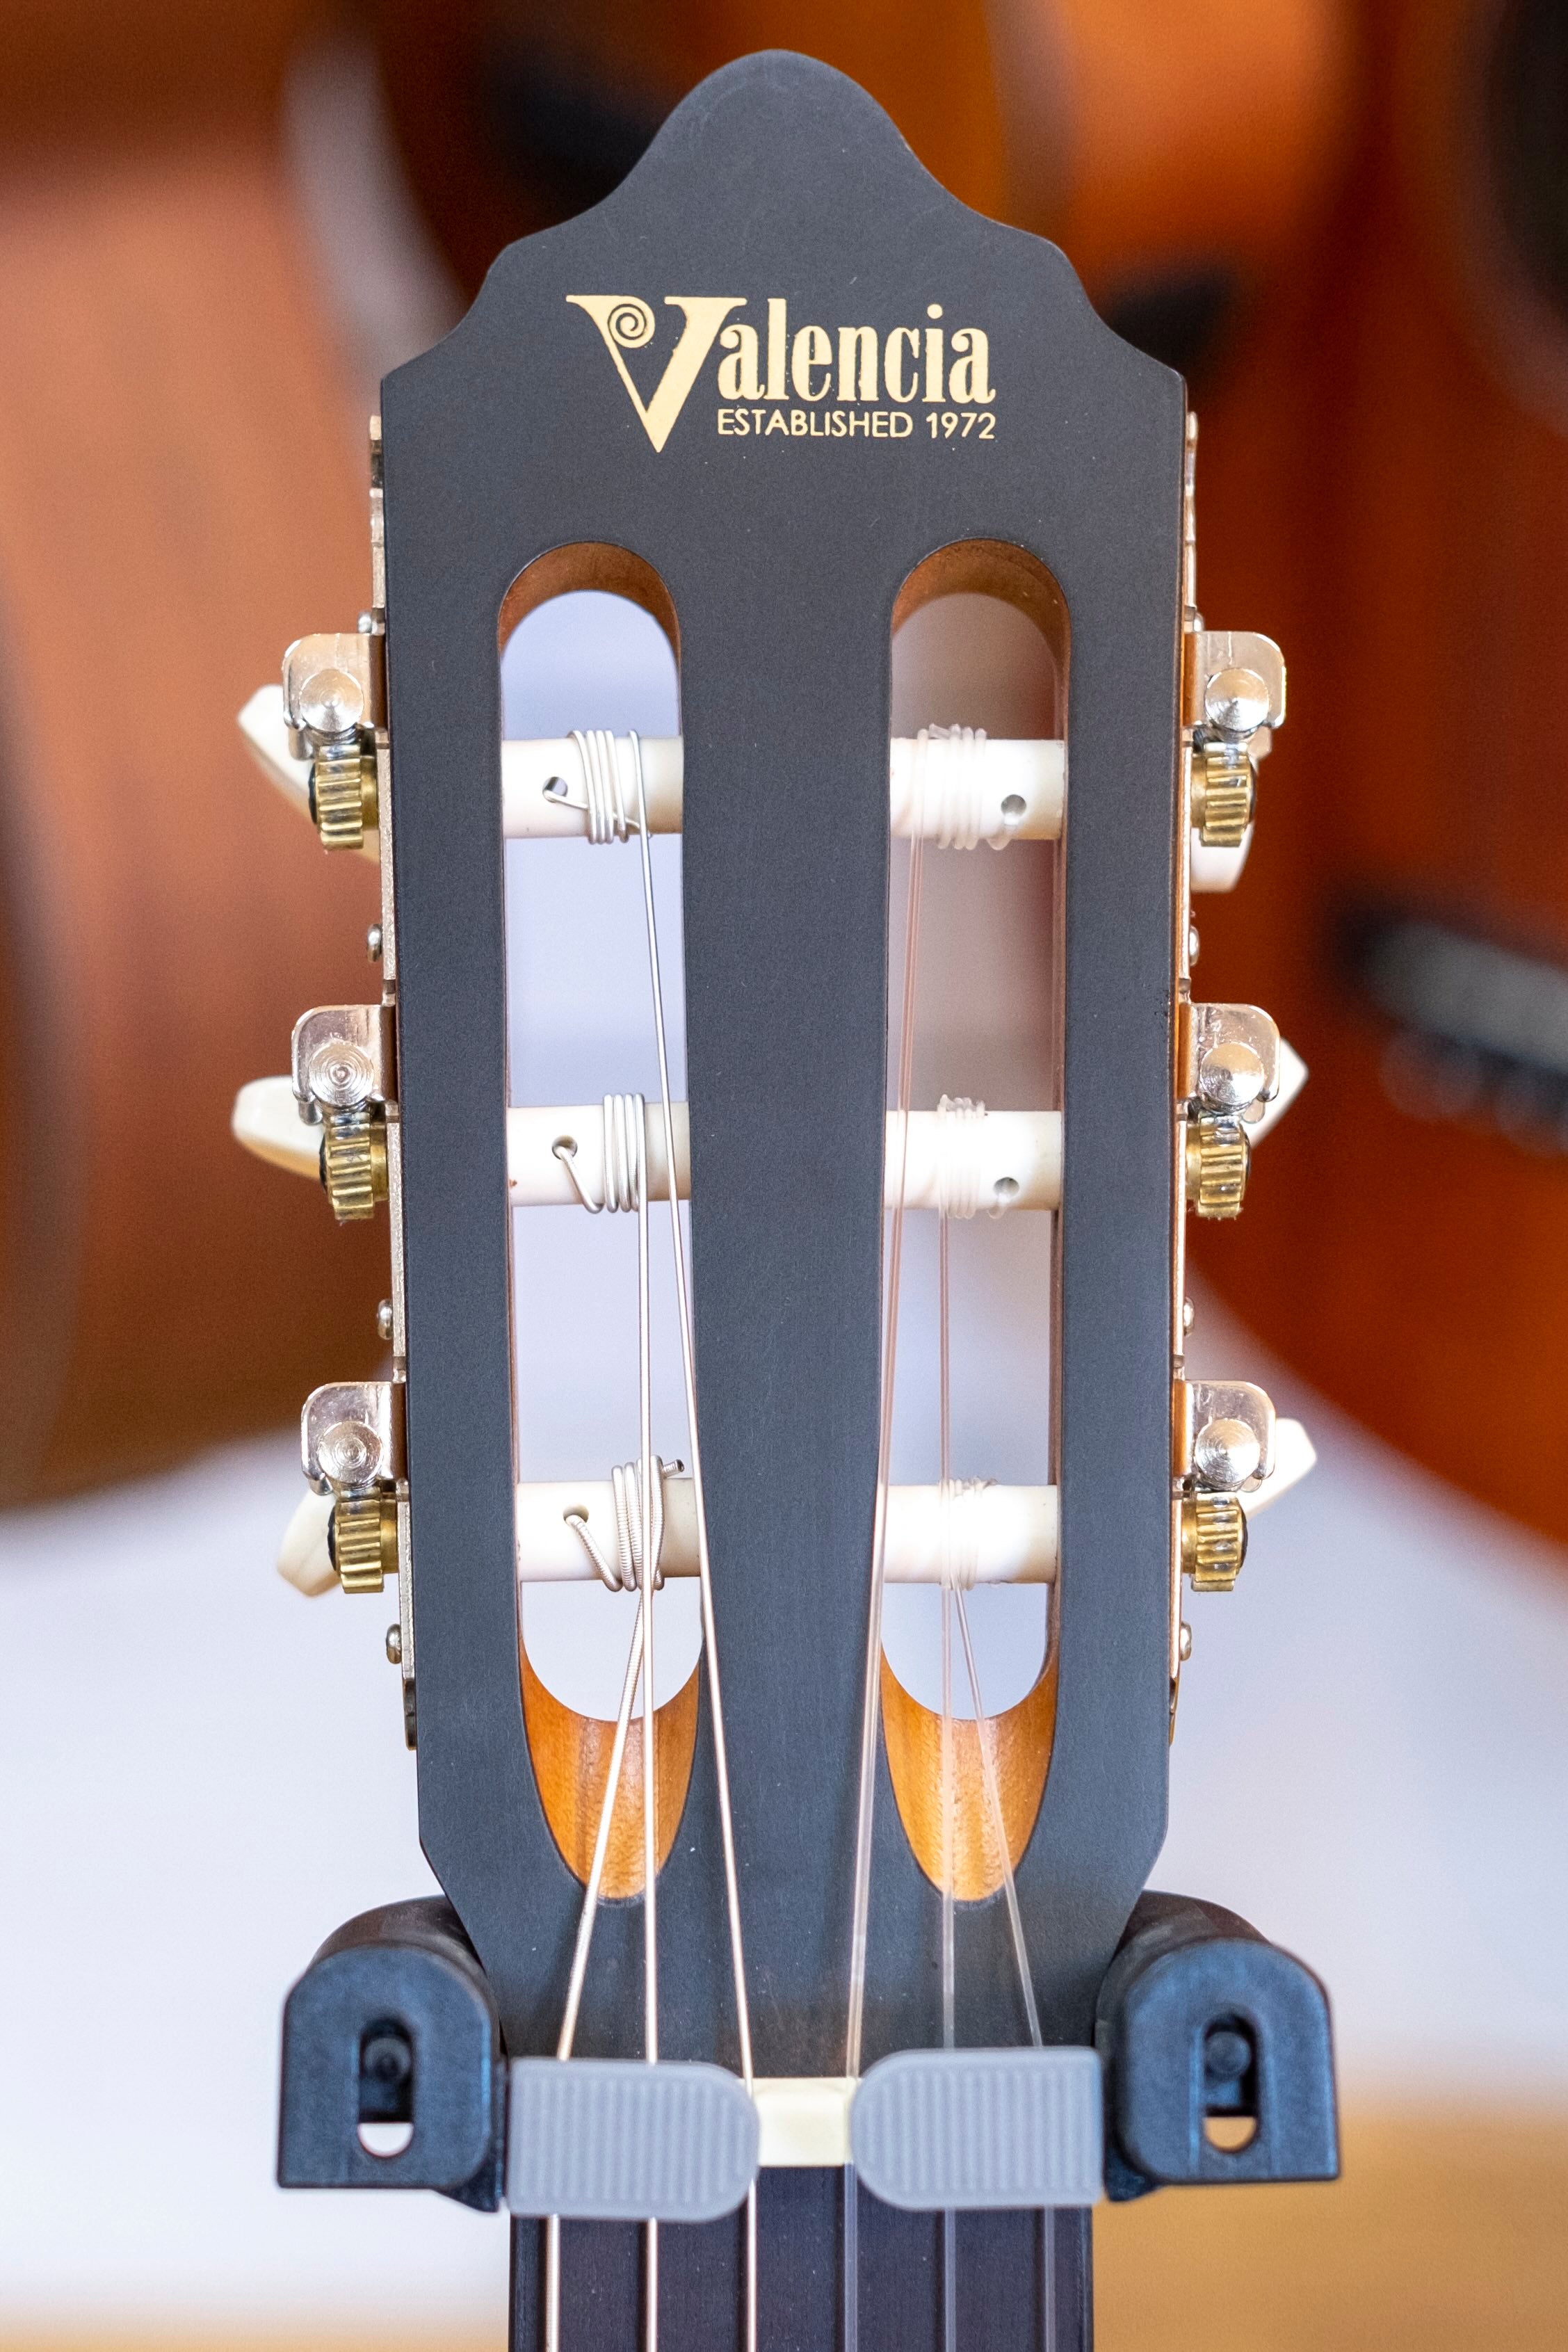 Valencia 200 Series 4/4 Size Nylon String Classical Guitar (Antique Natural)